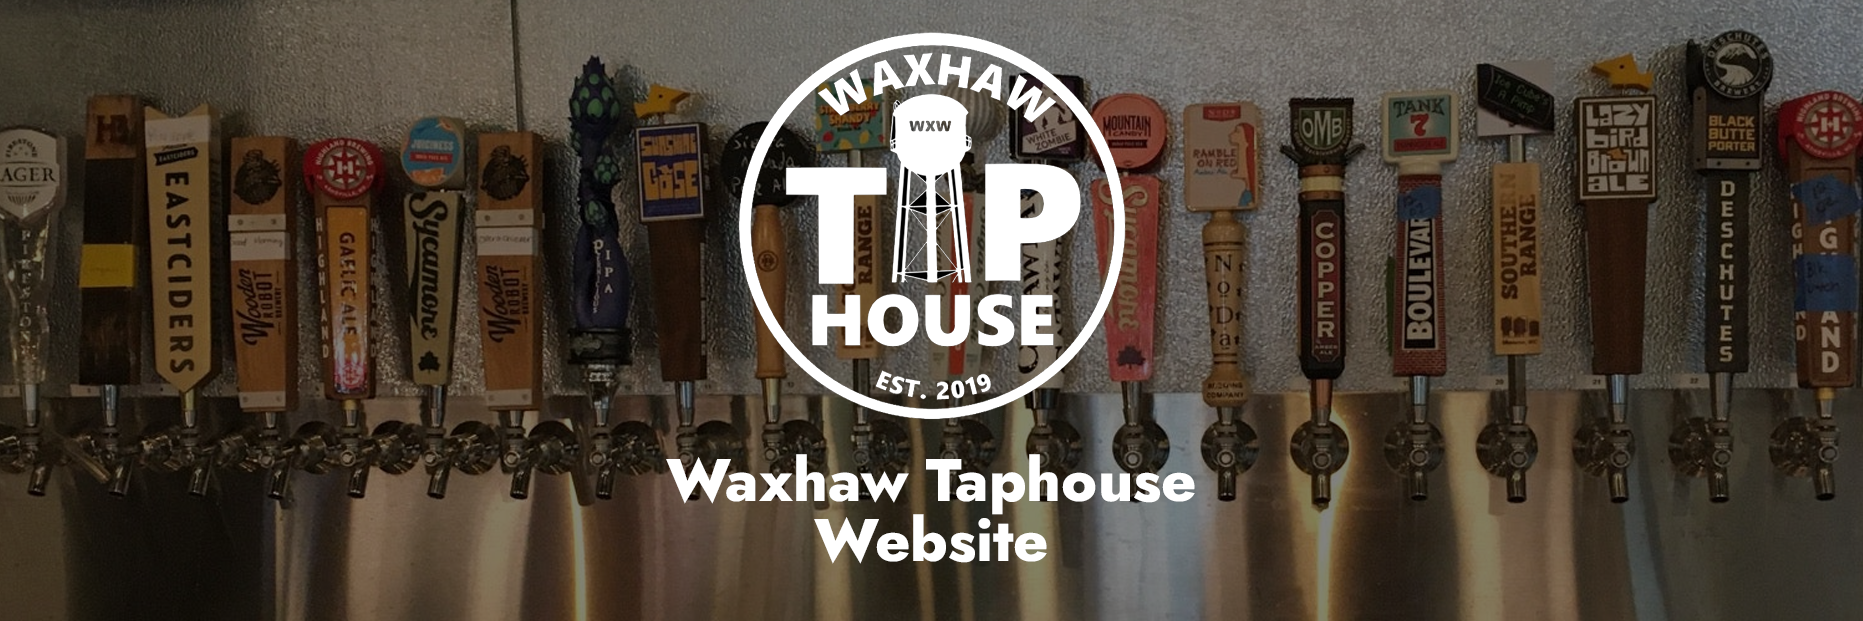 taphouse website